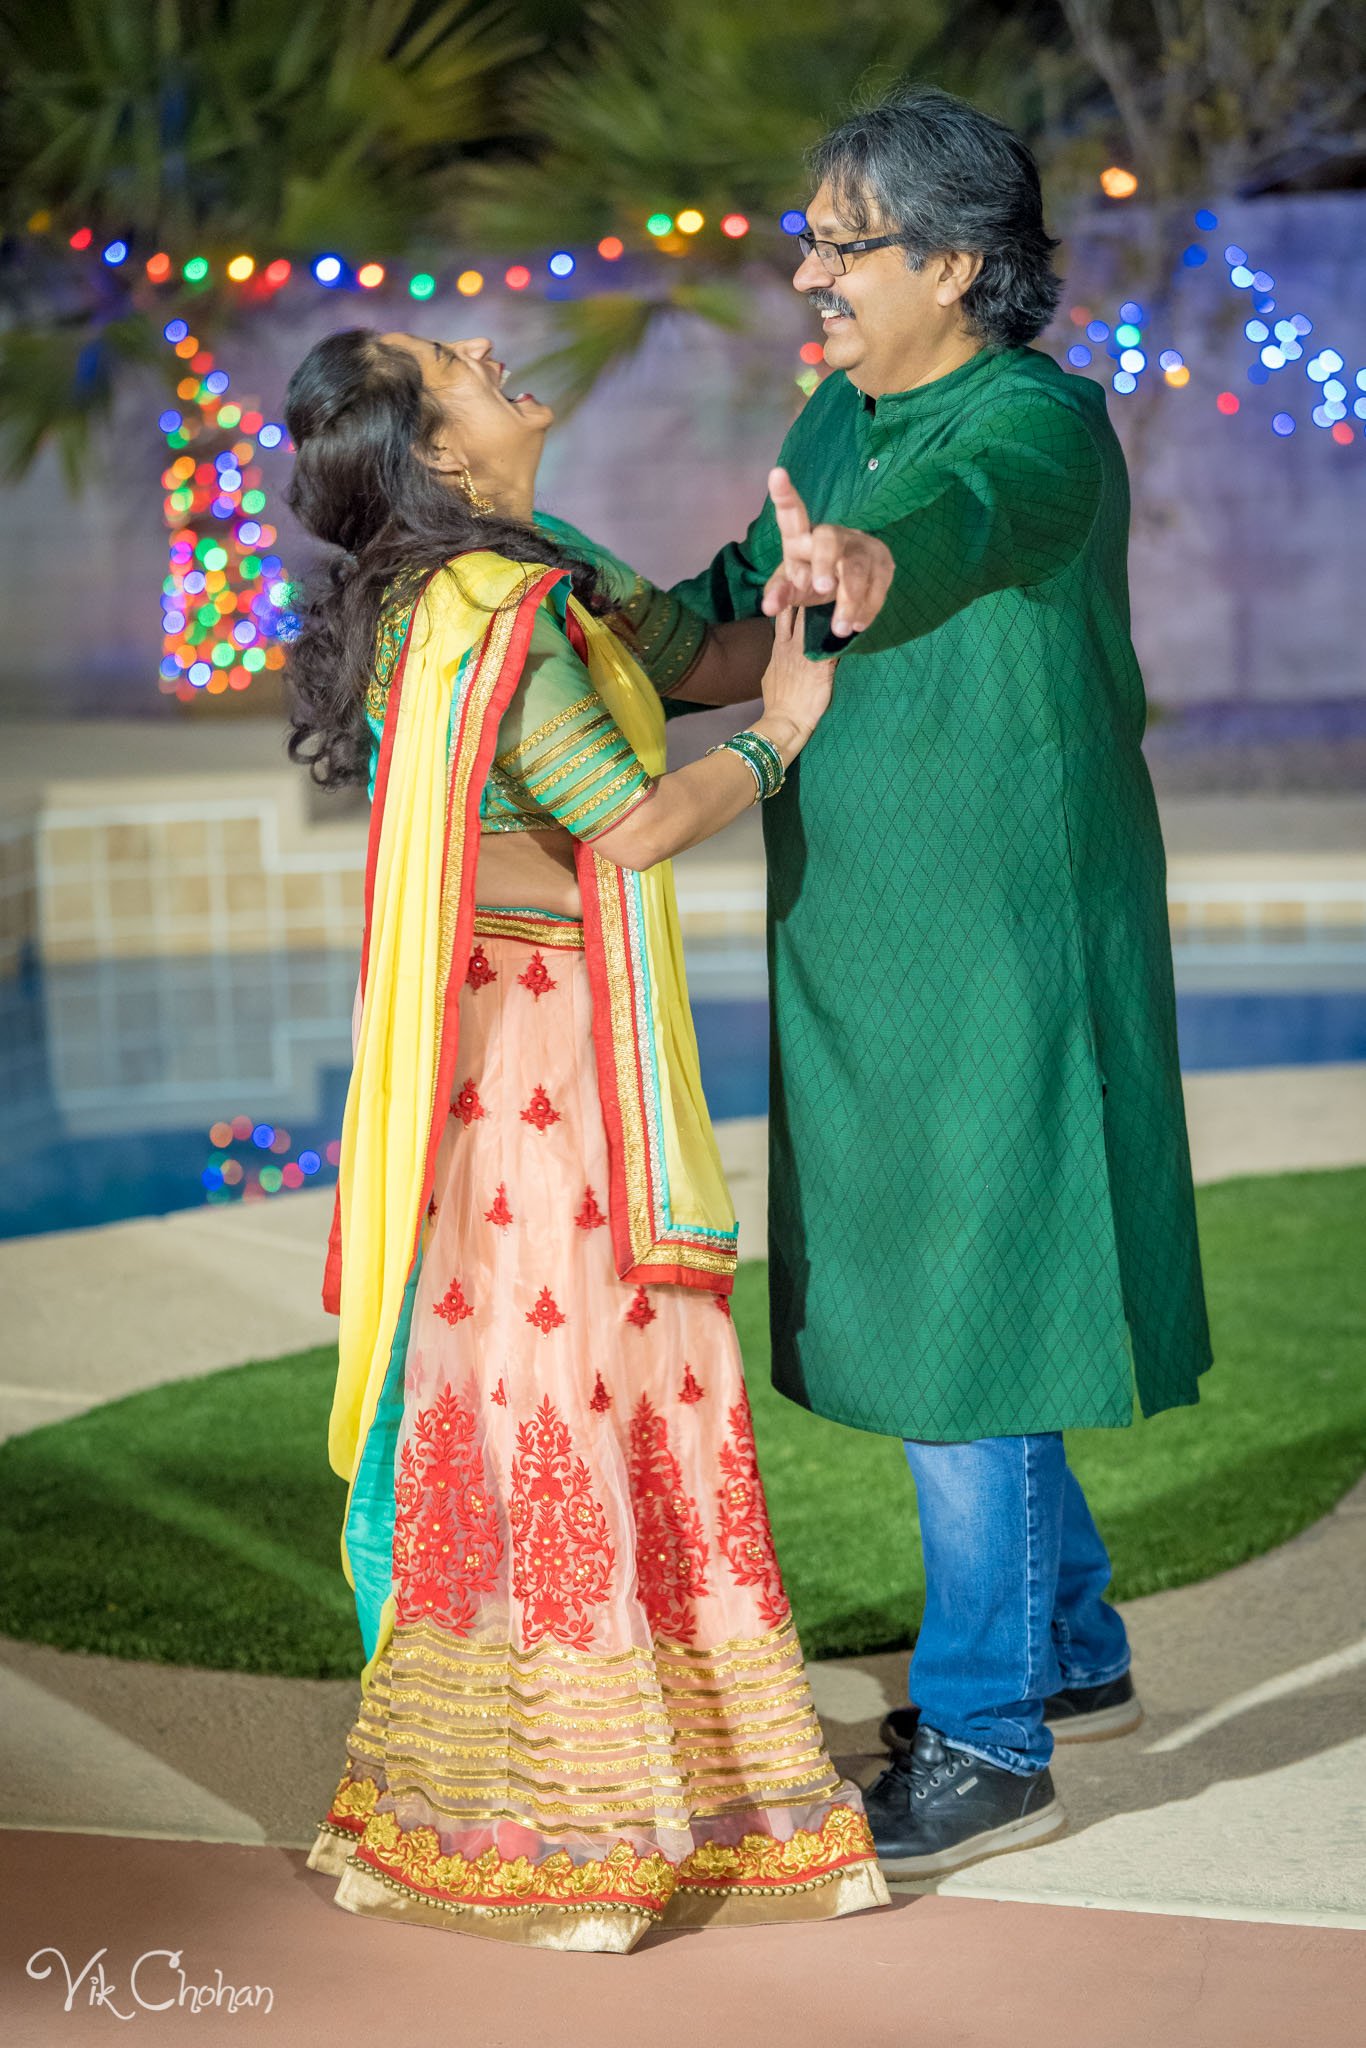 2022-02-04-Hely-&-Parth-Garba-Night-Indian-Wedding-Vik-Chohan-Photography-Photo-Booth-Social-Media-VCP-224.jpg